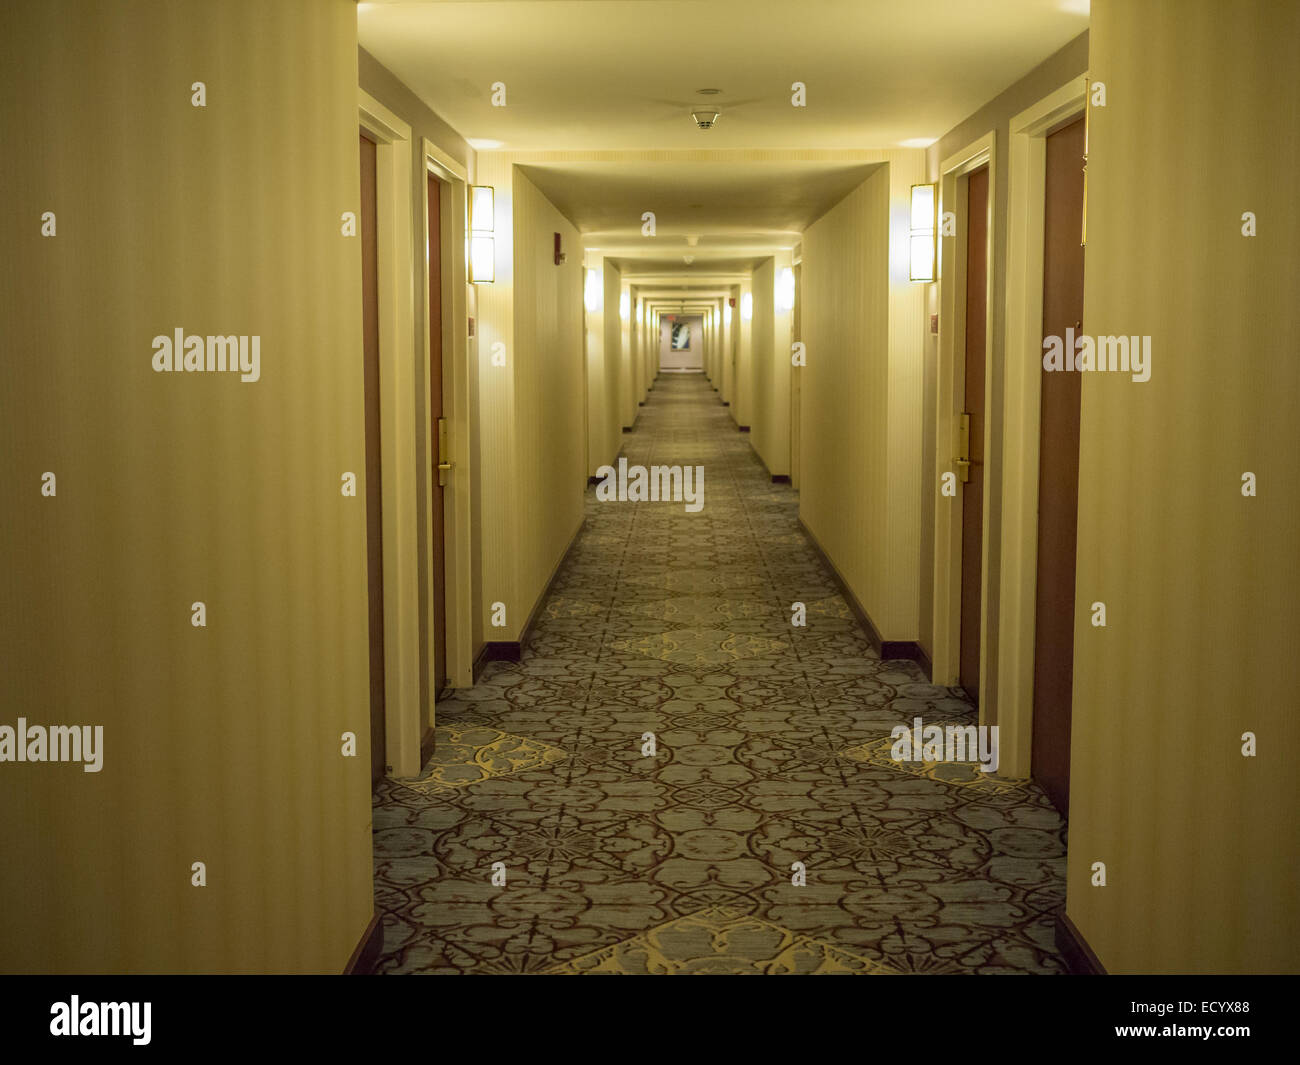 Hilton hotel hallway Stock Photo